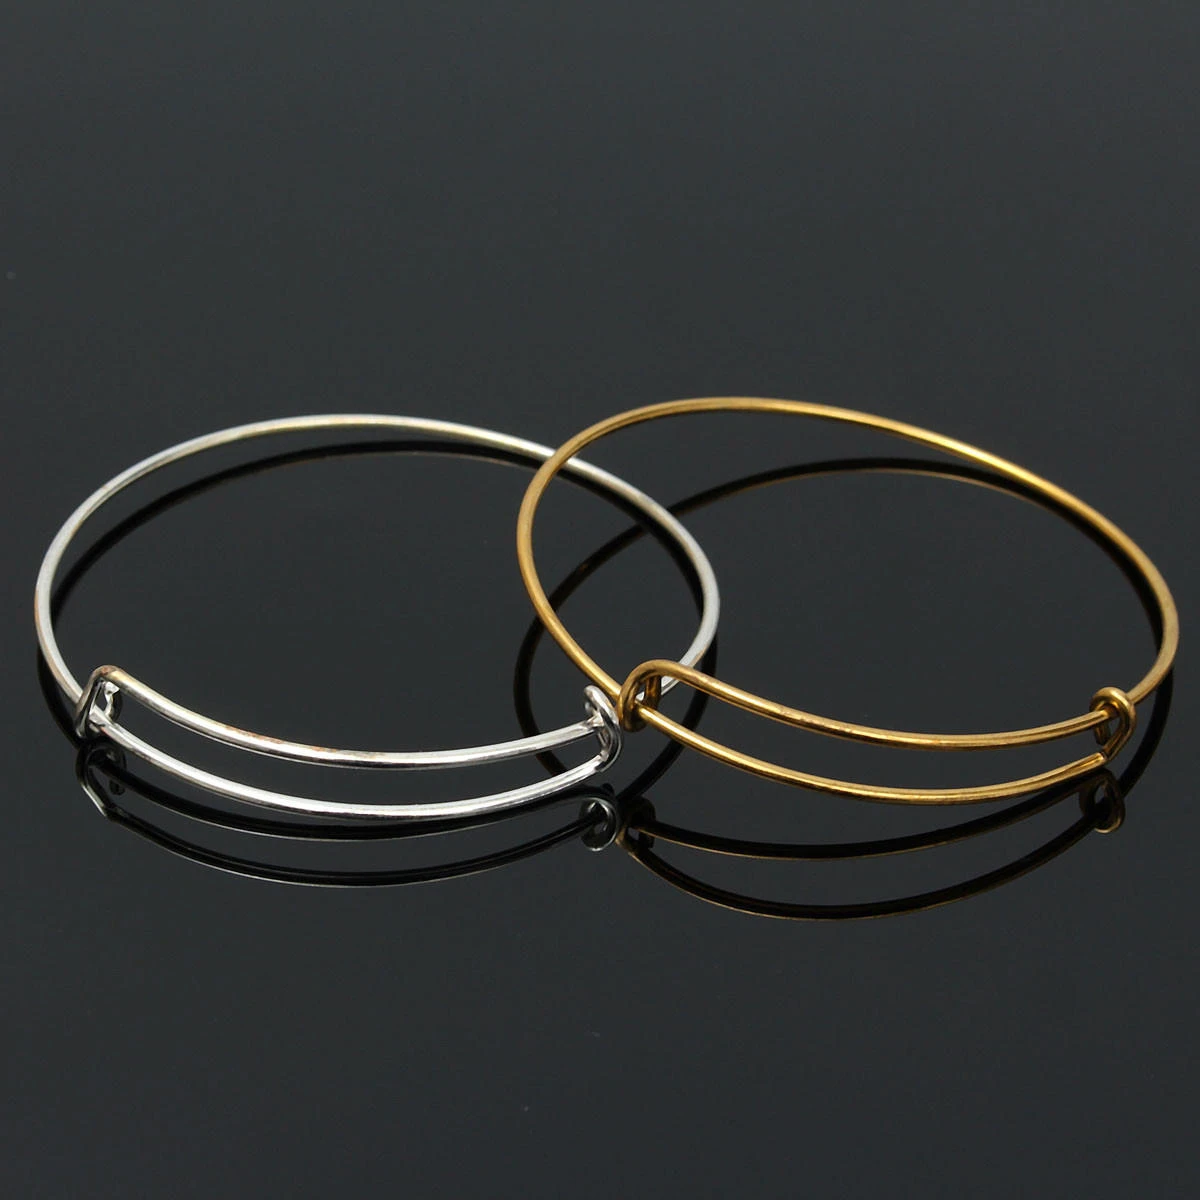 10/20Pcs Silver Plated Expandable Adjustable Bulk Wire Wrapped Bangle Bracelet